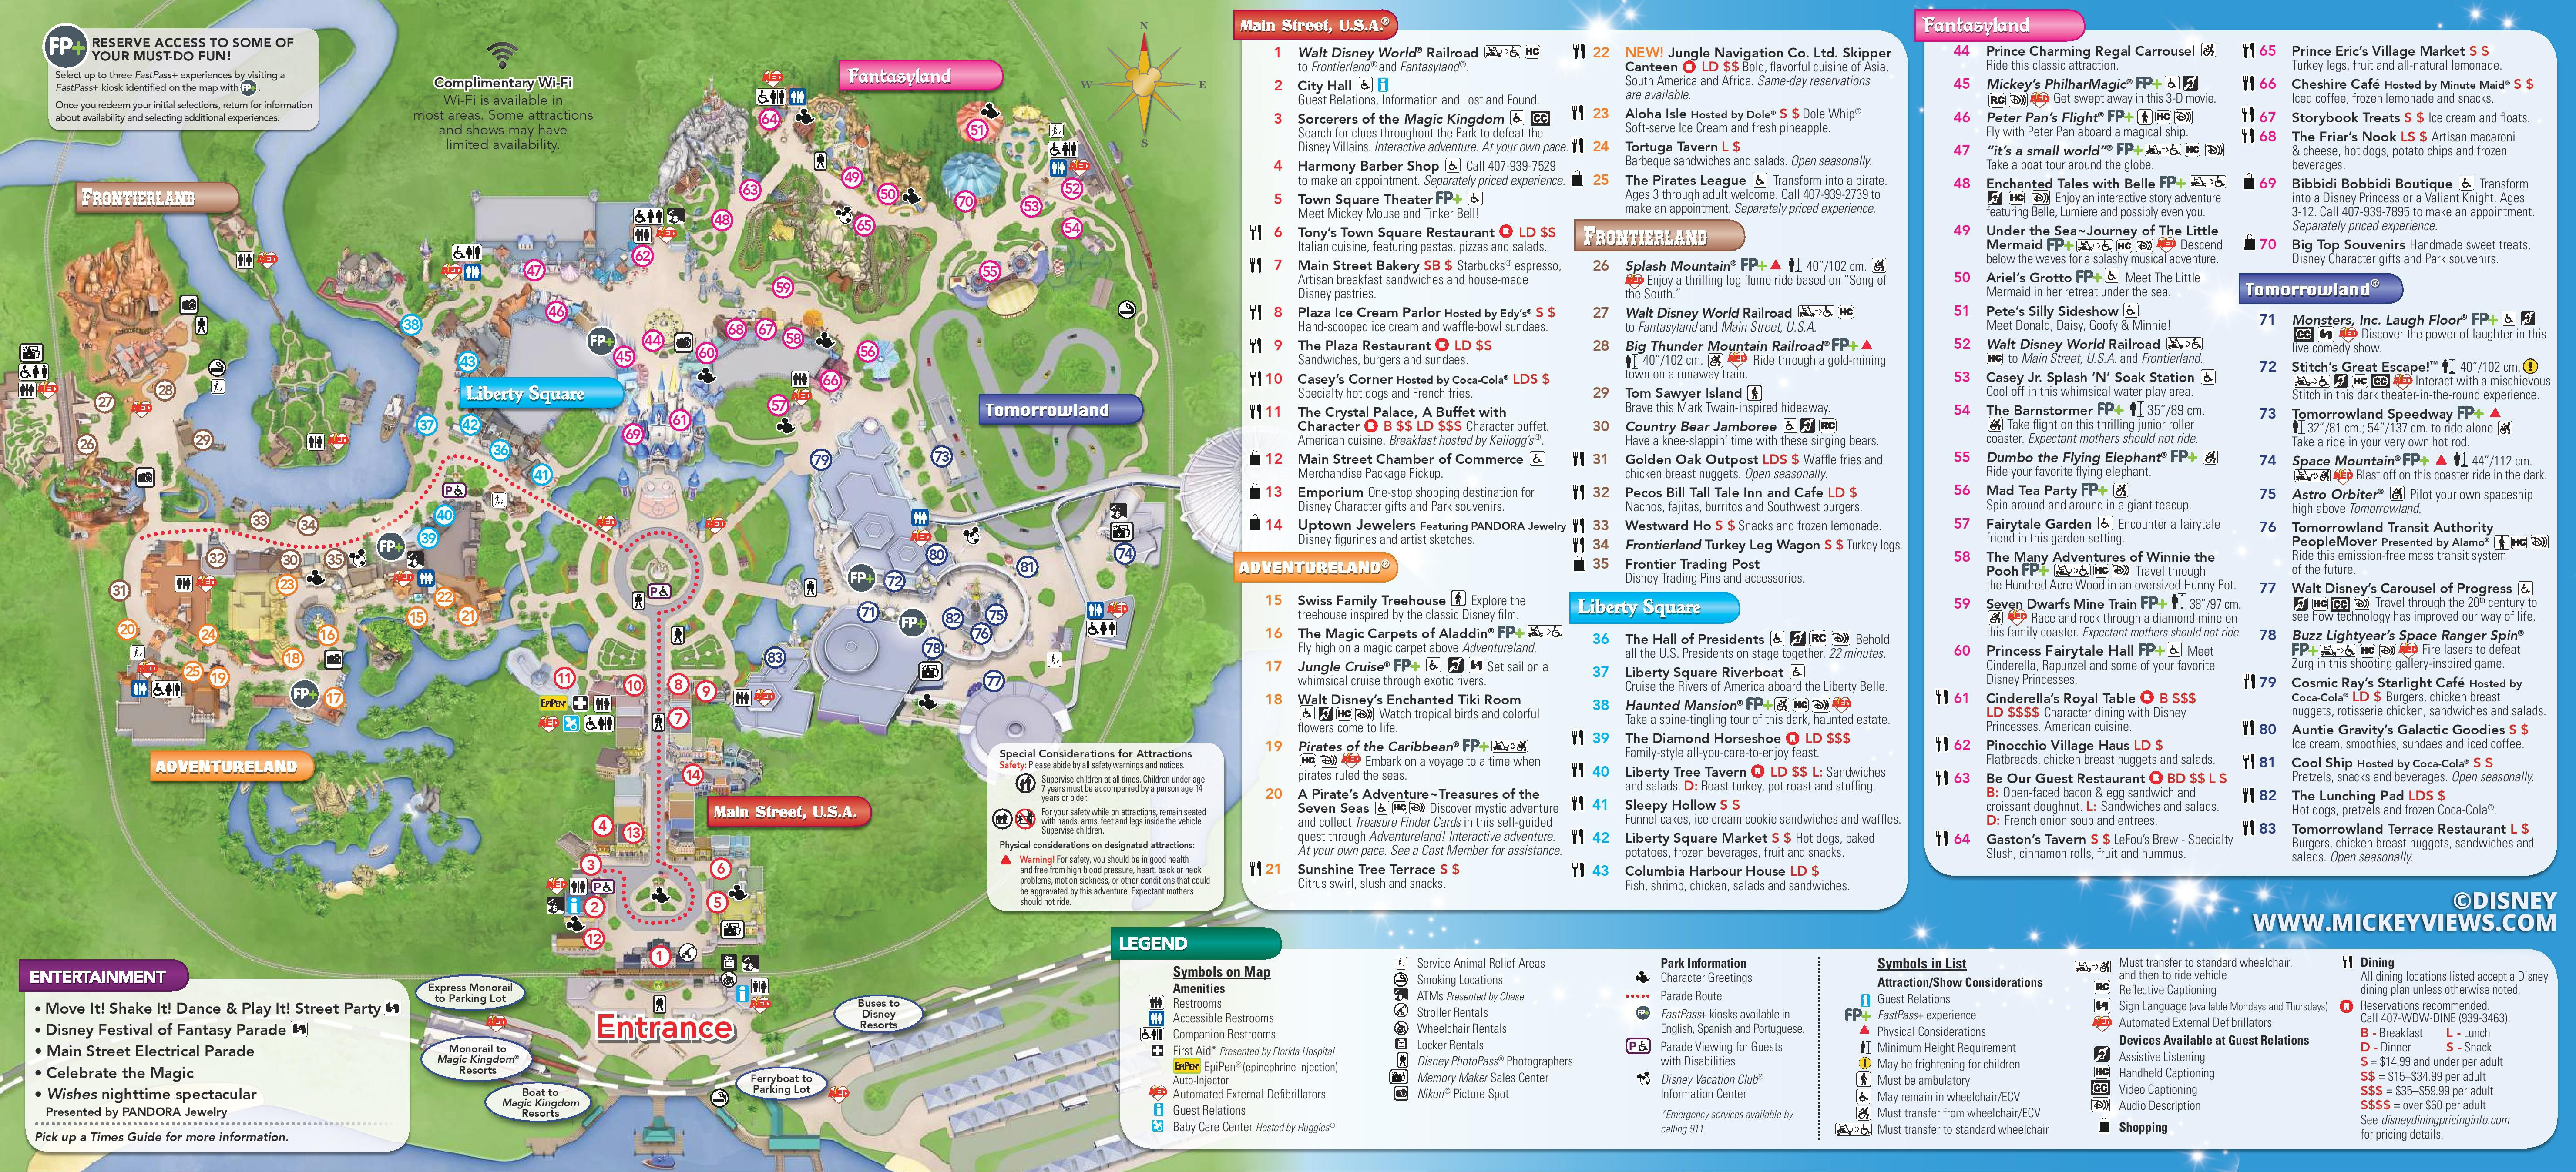 Disney World Map awesomebryner